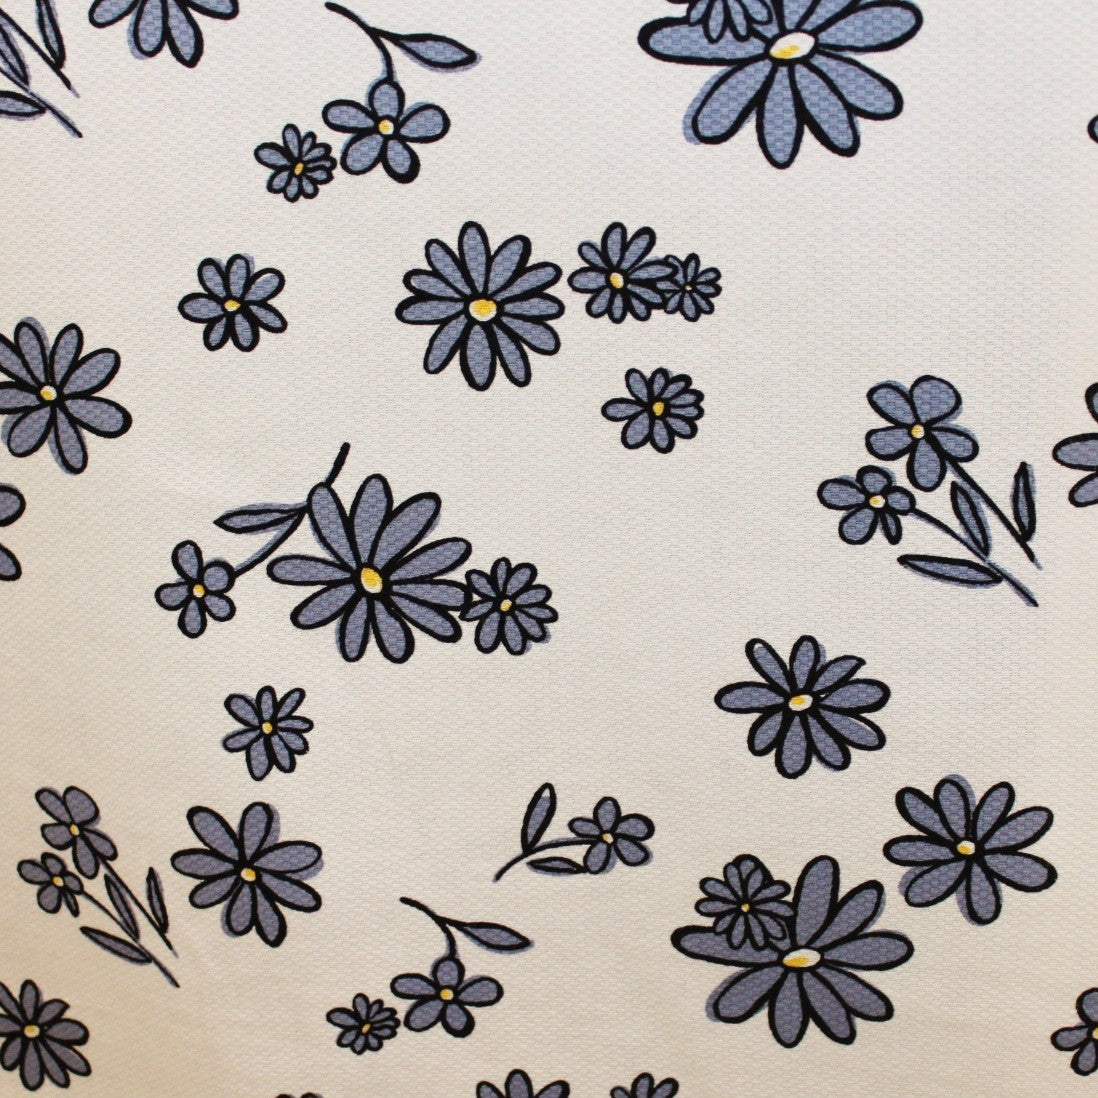 Graphic Floral Daisy Printed Cotton Pique - Blue/White